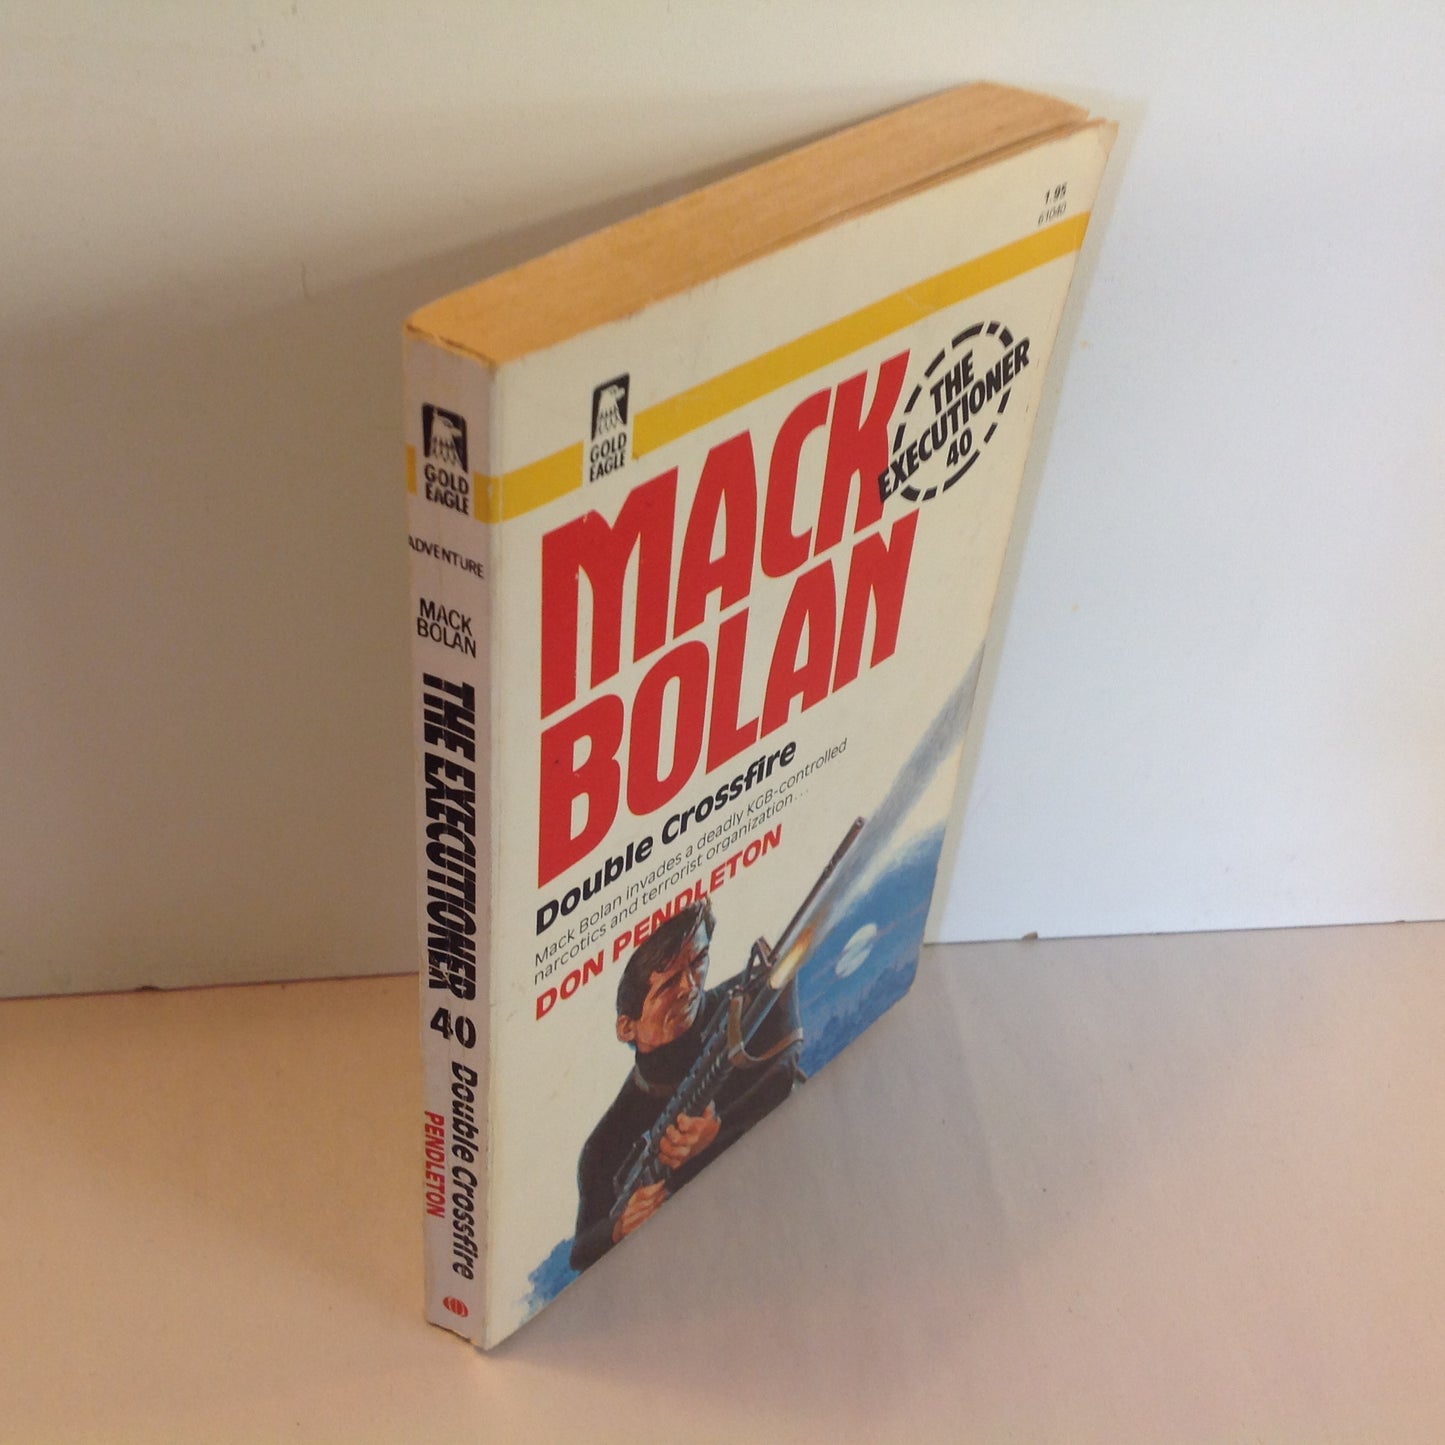 Vintage 1982 Mass Market Paperback Mack Bolan The Executioner 40: Double Crossfire Don Pendleton